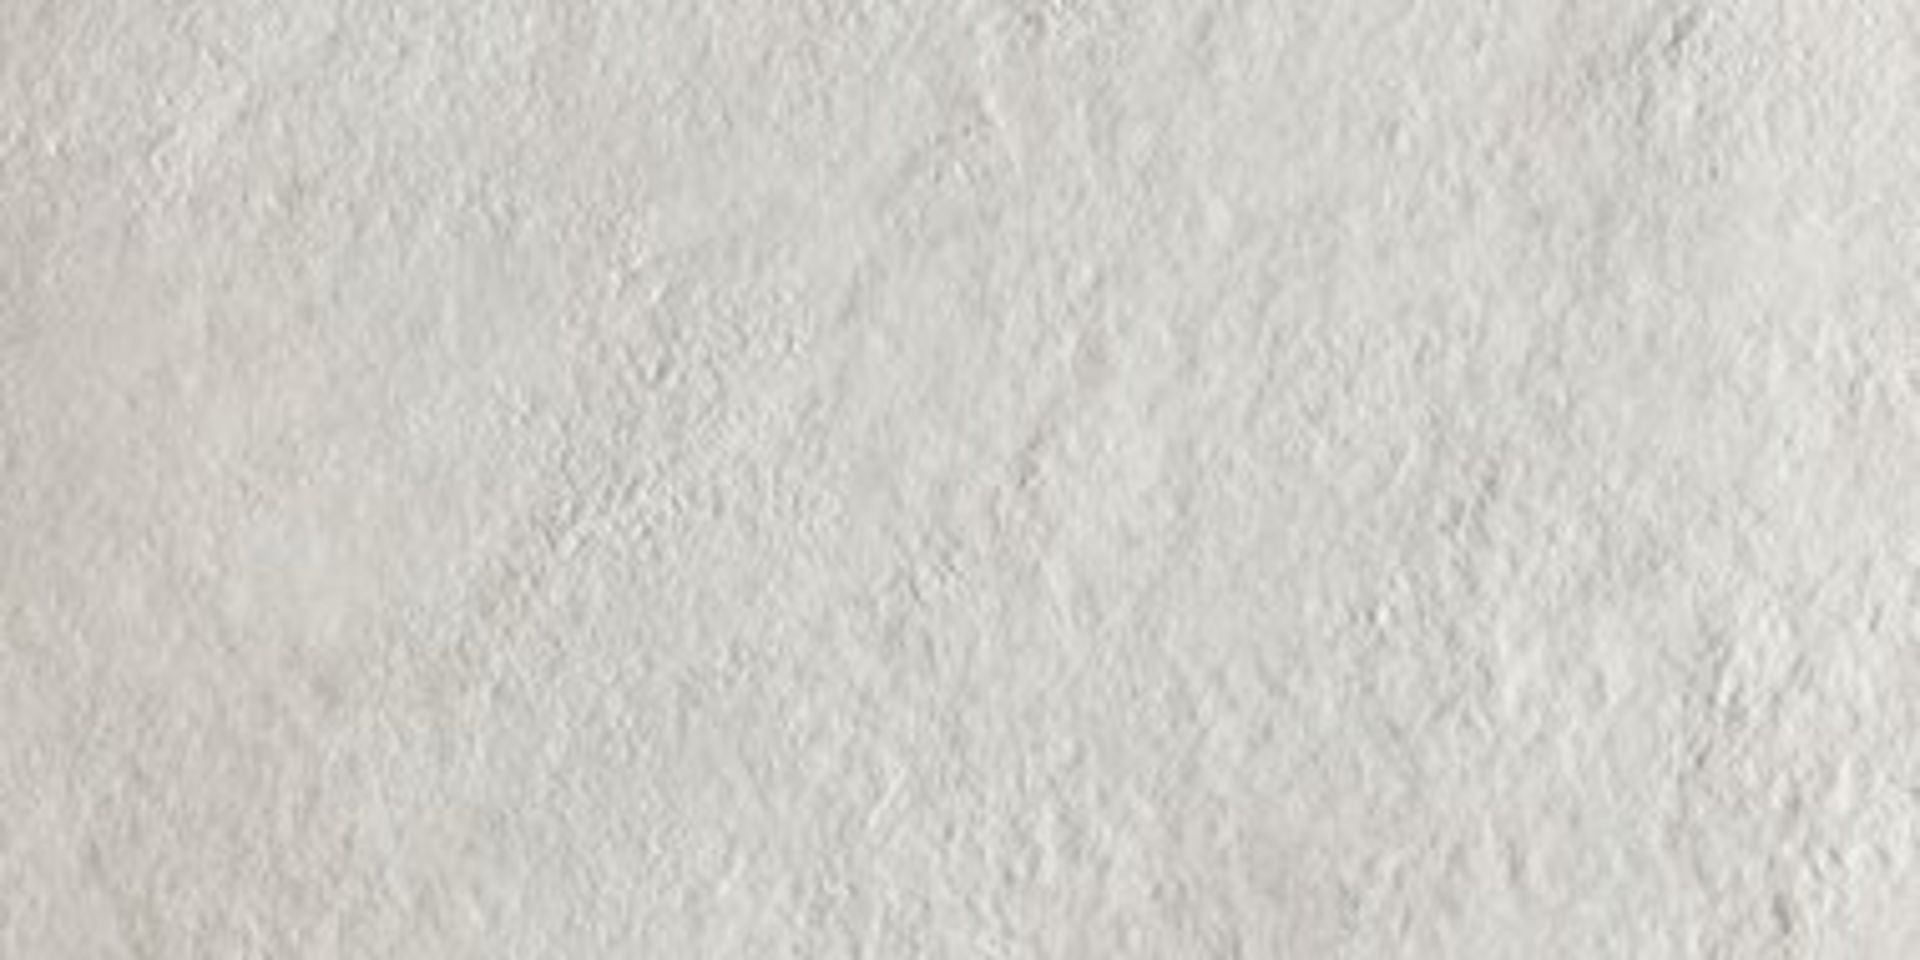 12 x Boxes of RAK Porcelain Floor or Wall Tiles - Concrete Sand Design Design in Beige - 30 x 60 - Image 4 of 10